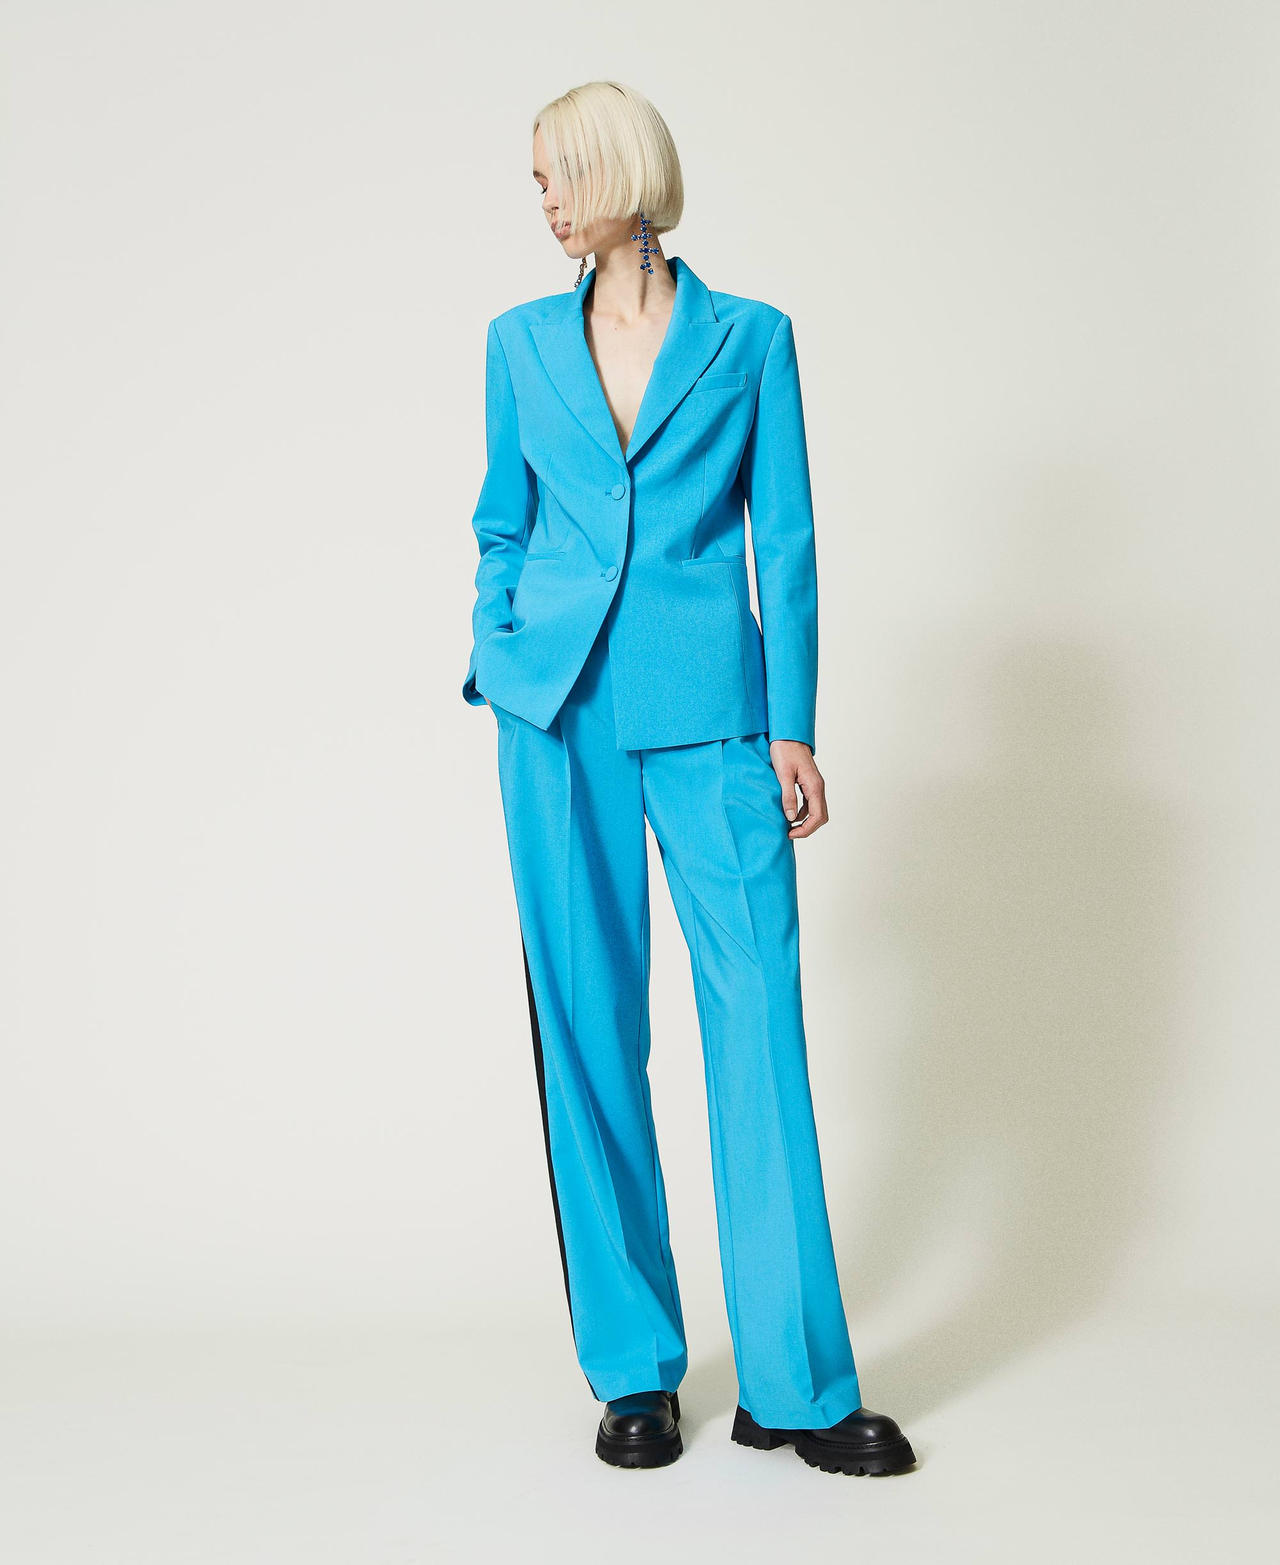 Palazzo trousers with side bands Malibu Blue Woman 232AP2202-02